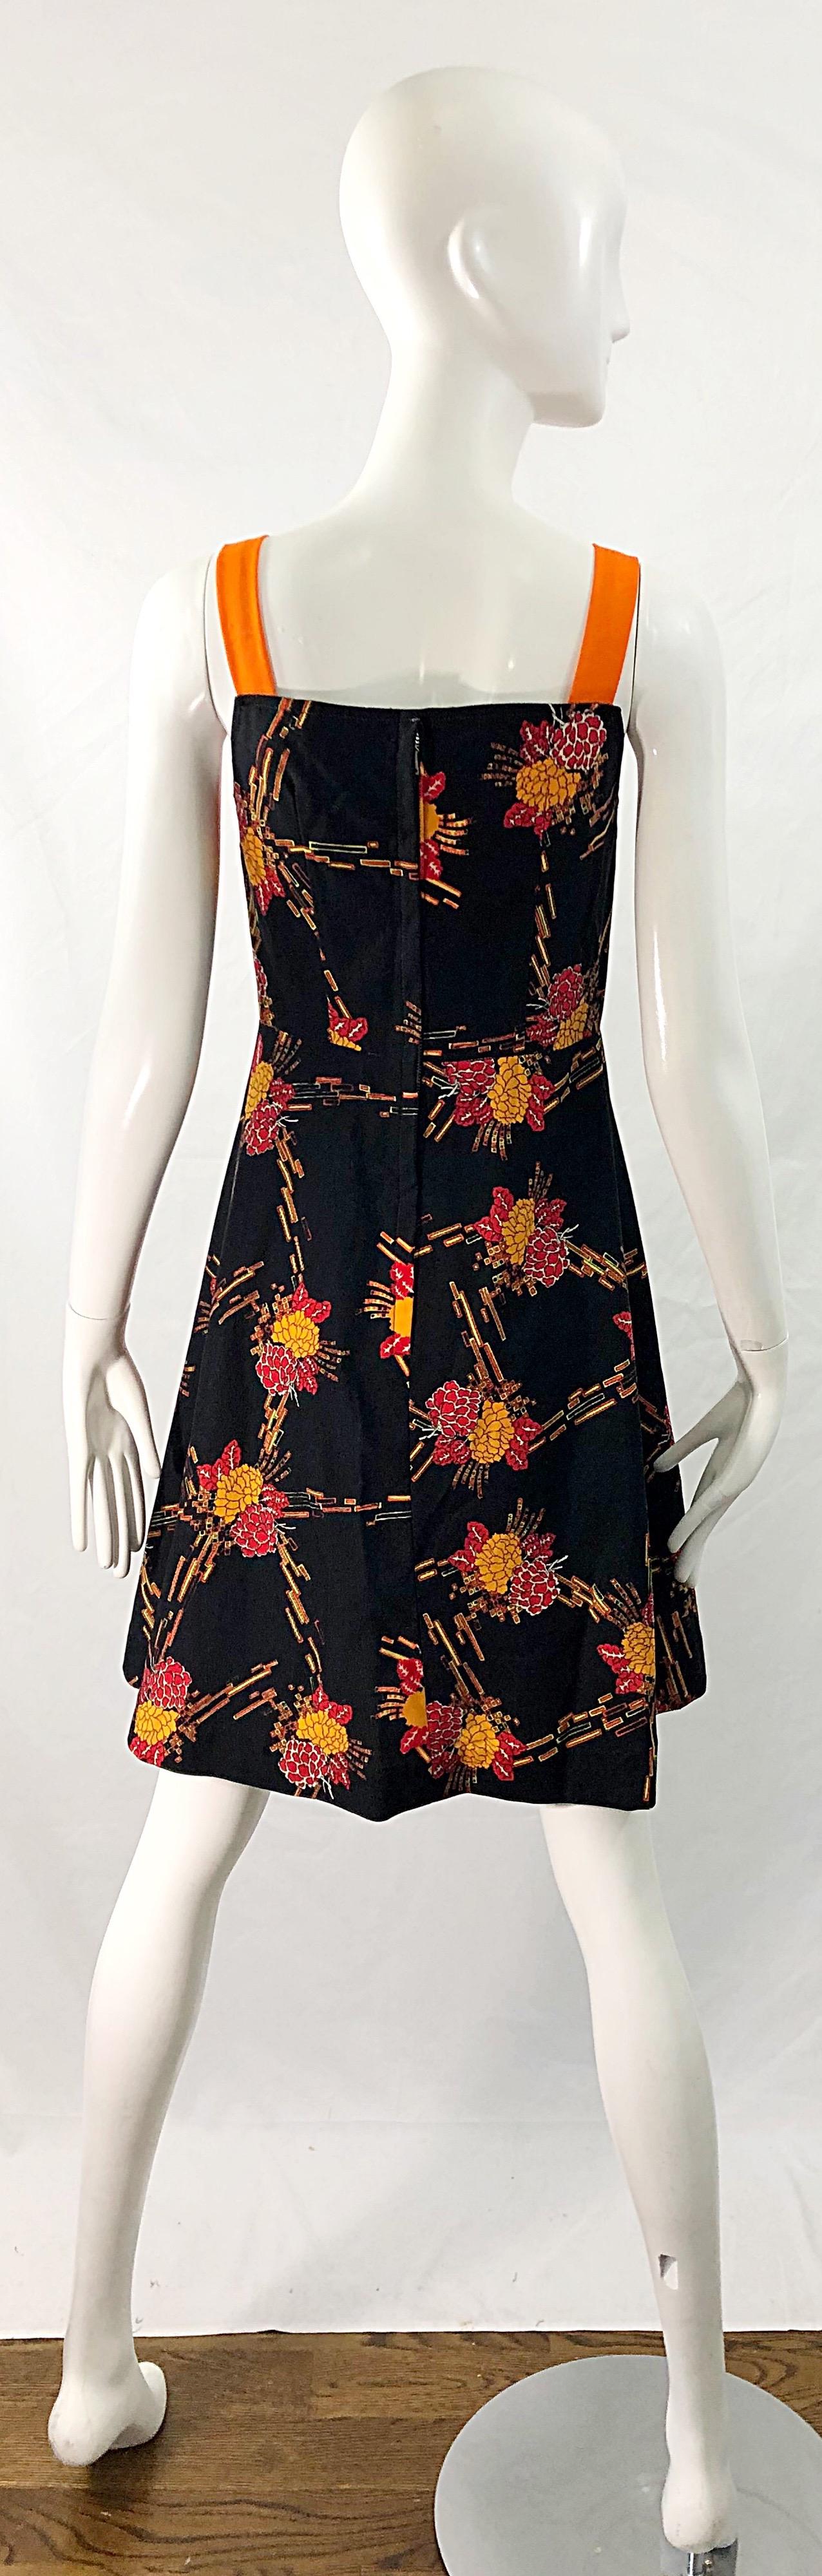 1970s Autumnal Digital Floral Print Knit Vintage 70s A Line Dress + Bolero Top For Sale 2